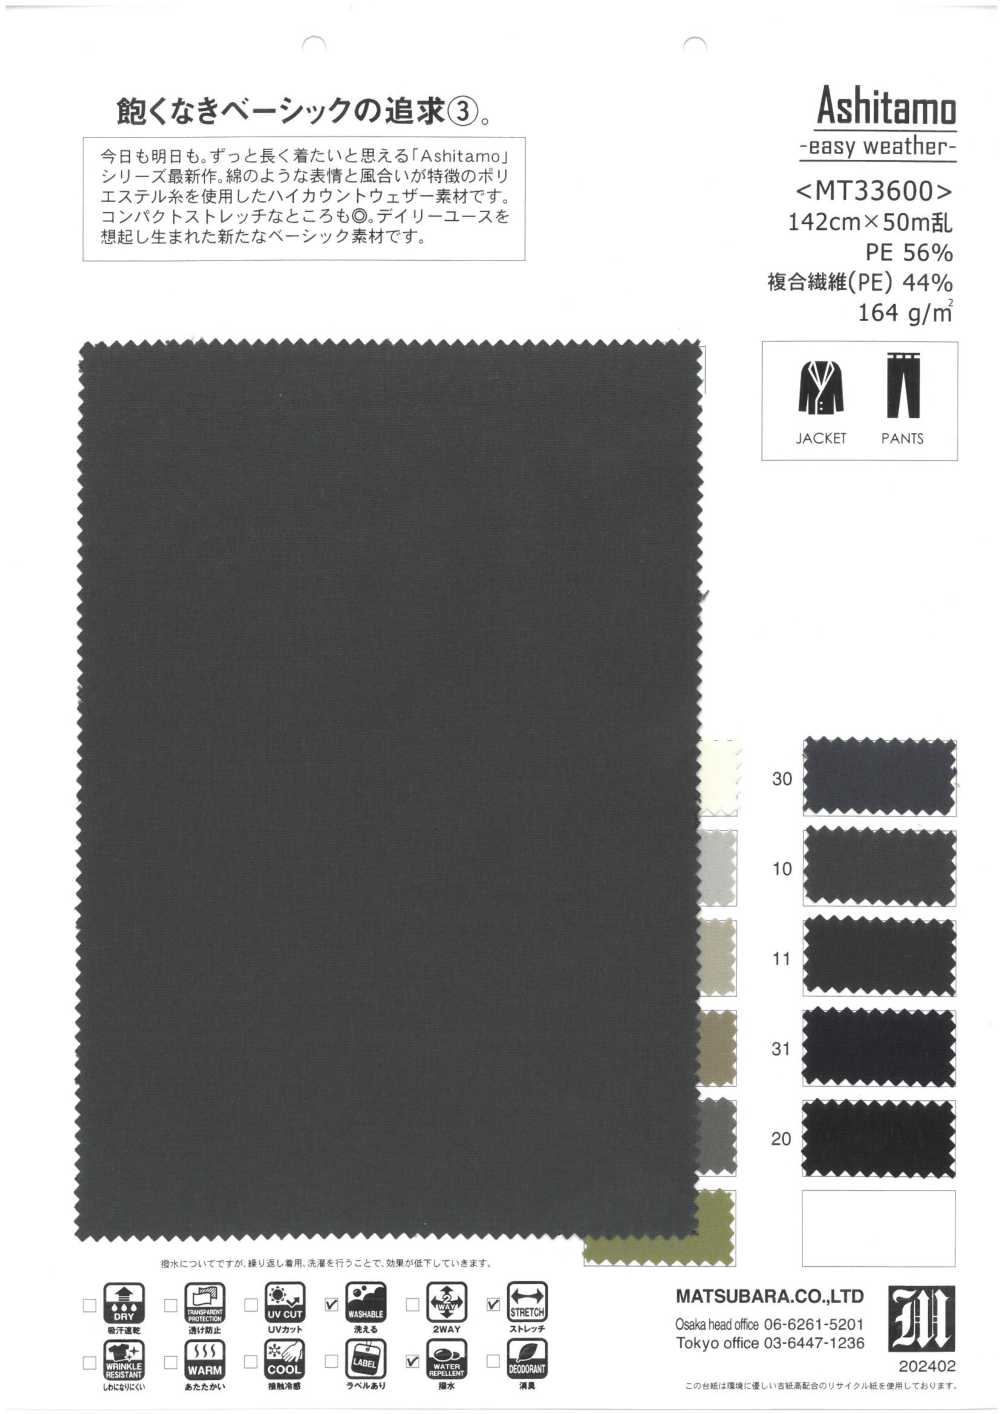 MT33600 Ashitamo -easy Weather-[Textile / Fabric] Matsubara